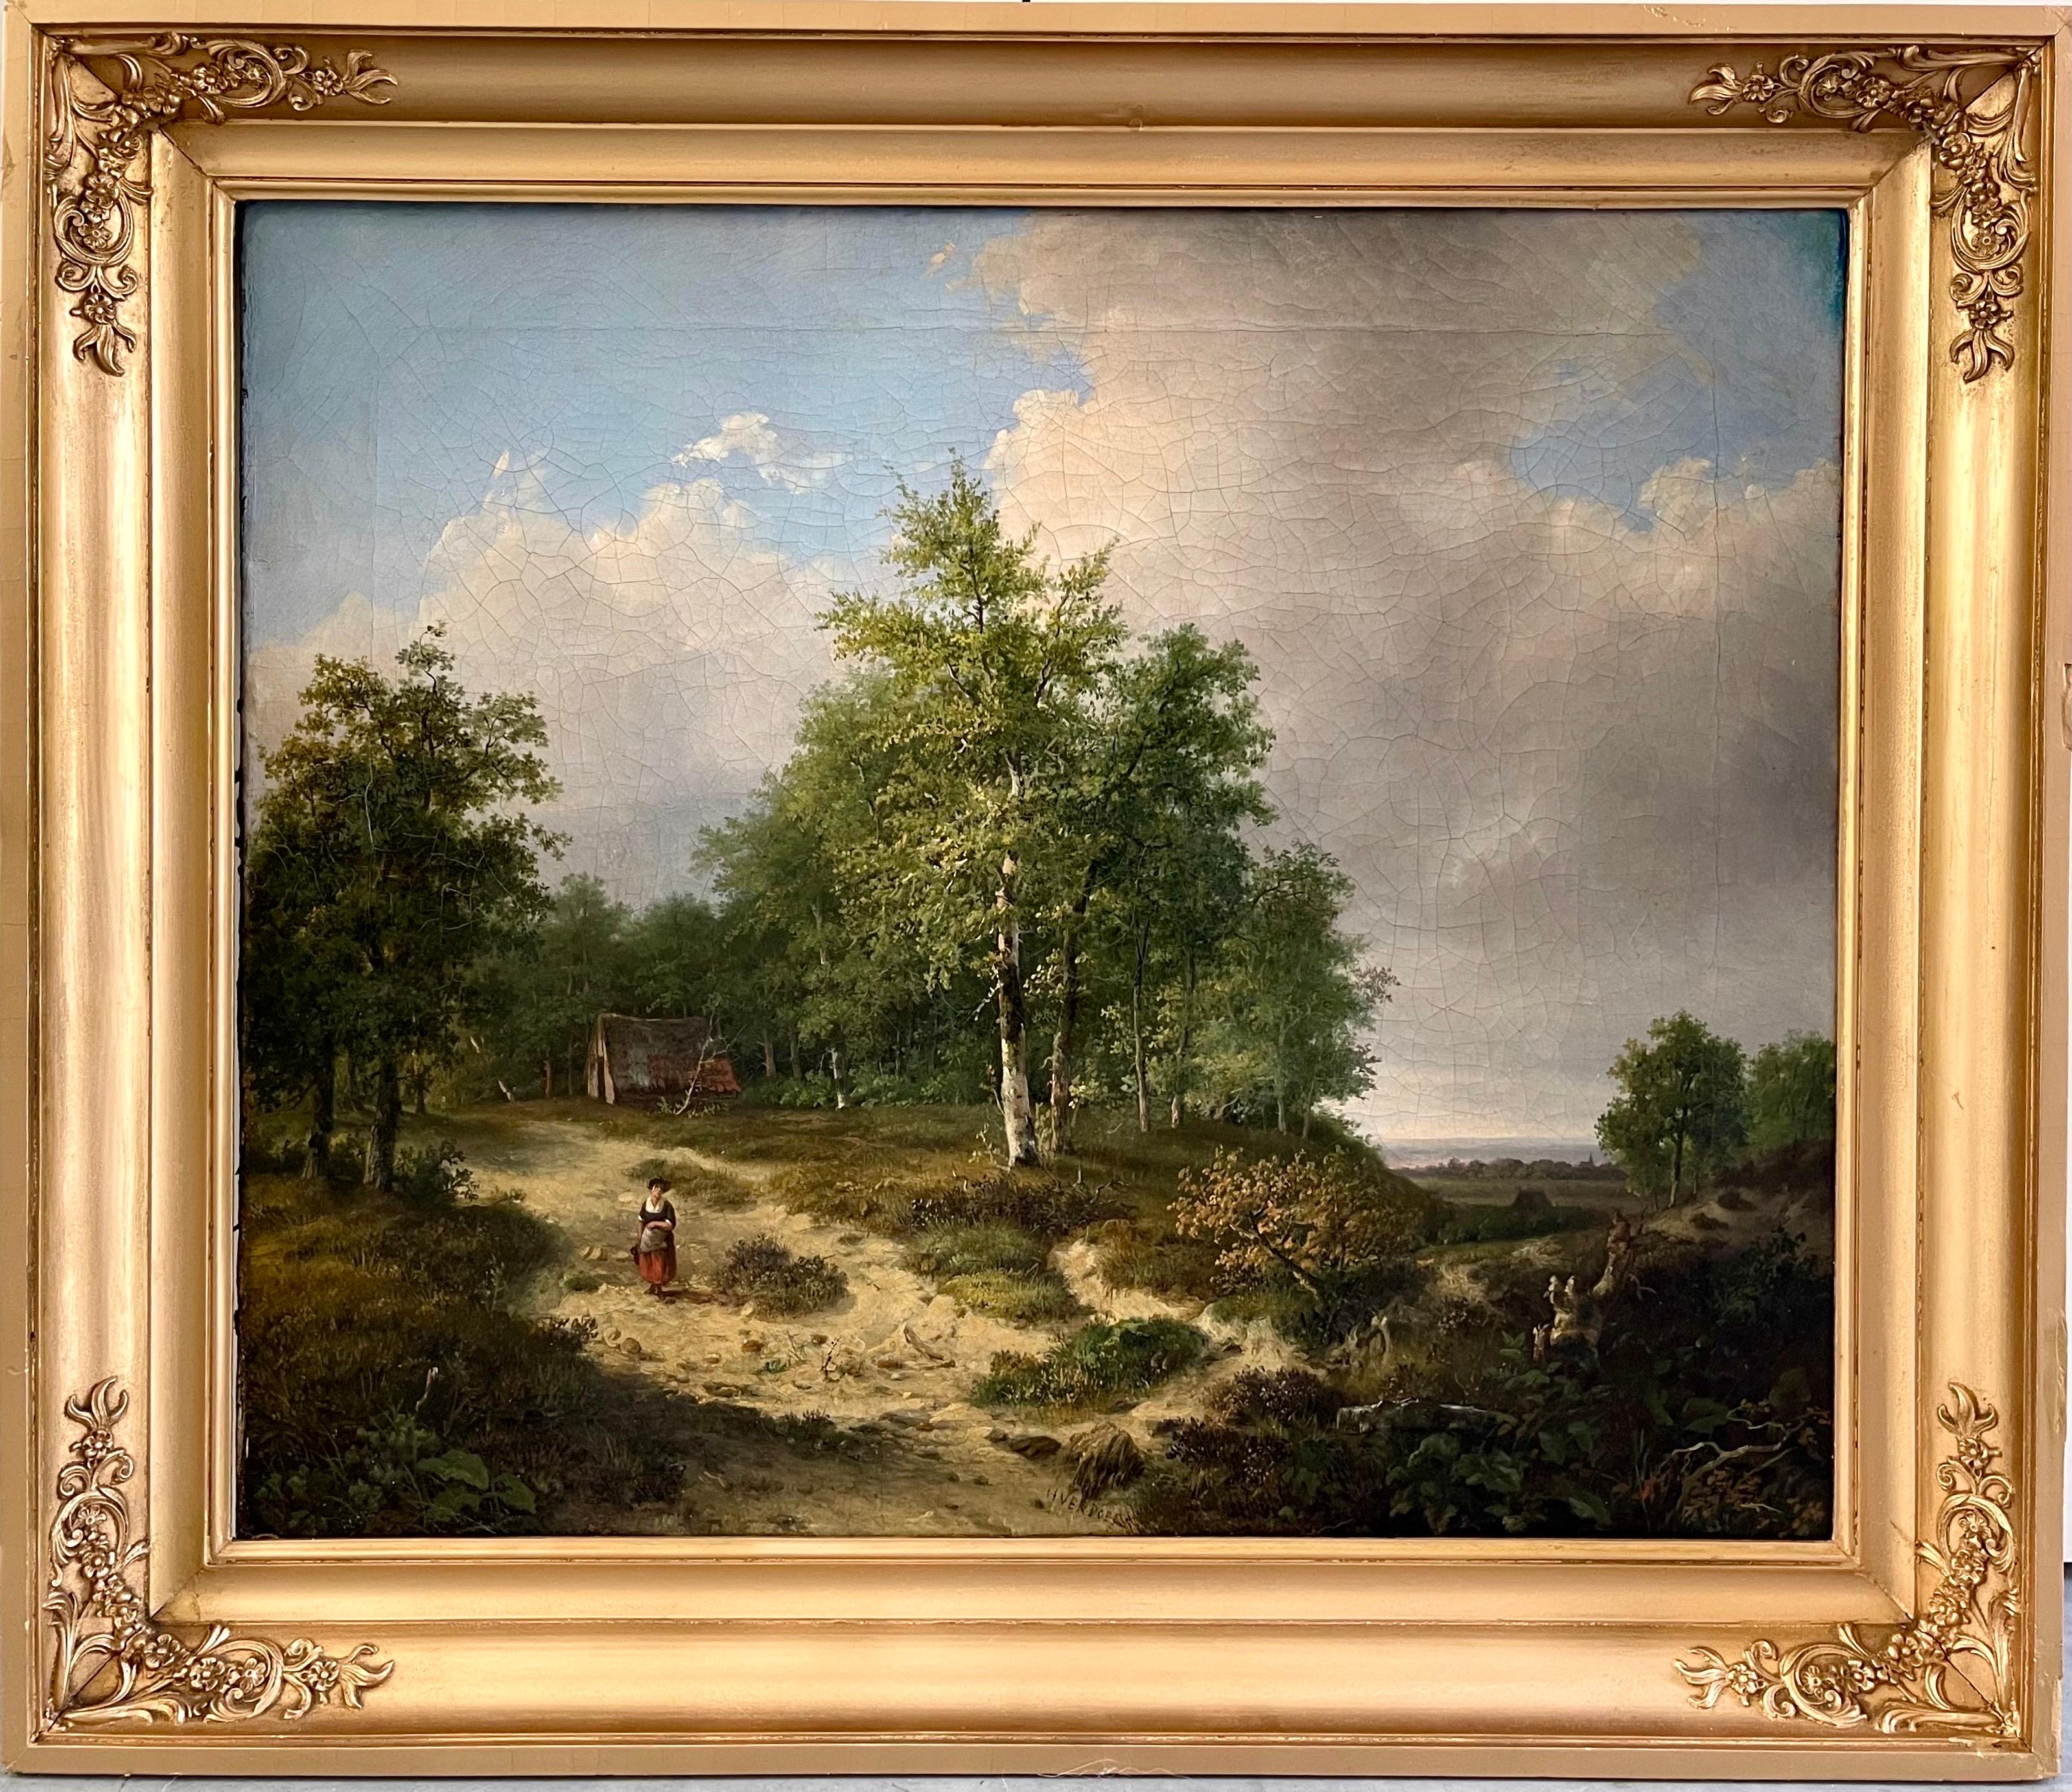 Hendrick Verpoeken Landscape Painting - 19th century Romantic Dutch landscape painting - farm countryside